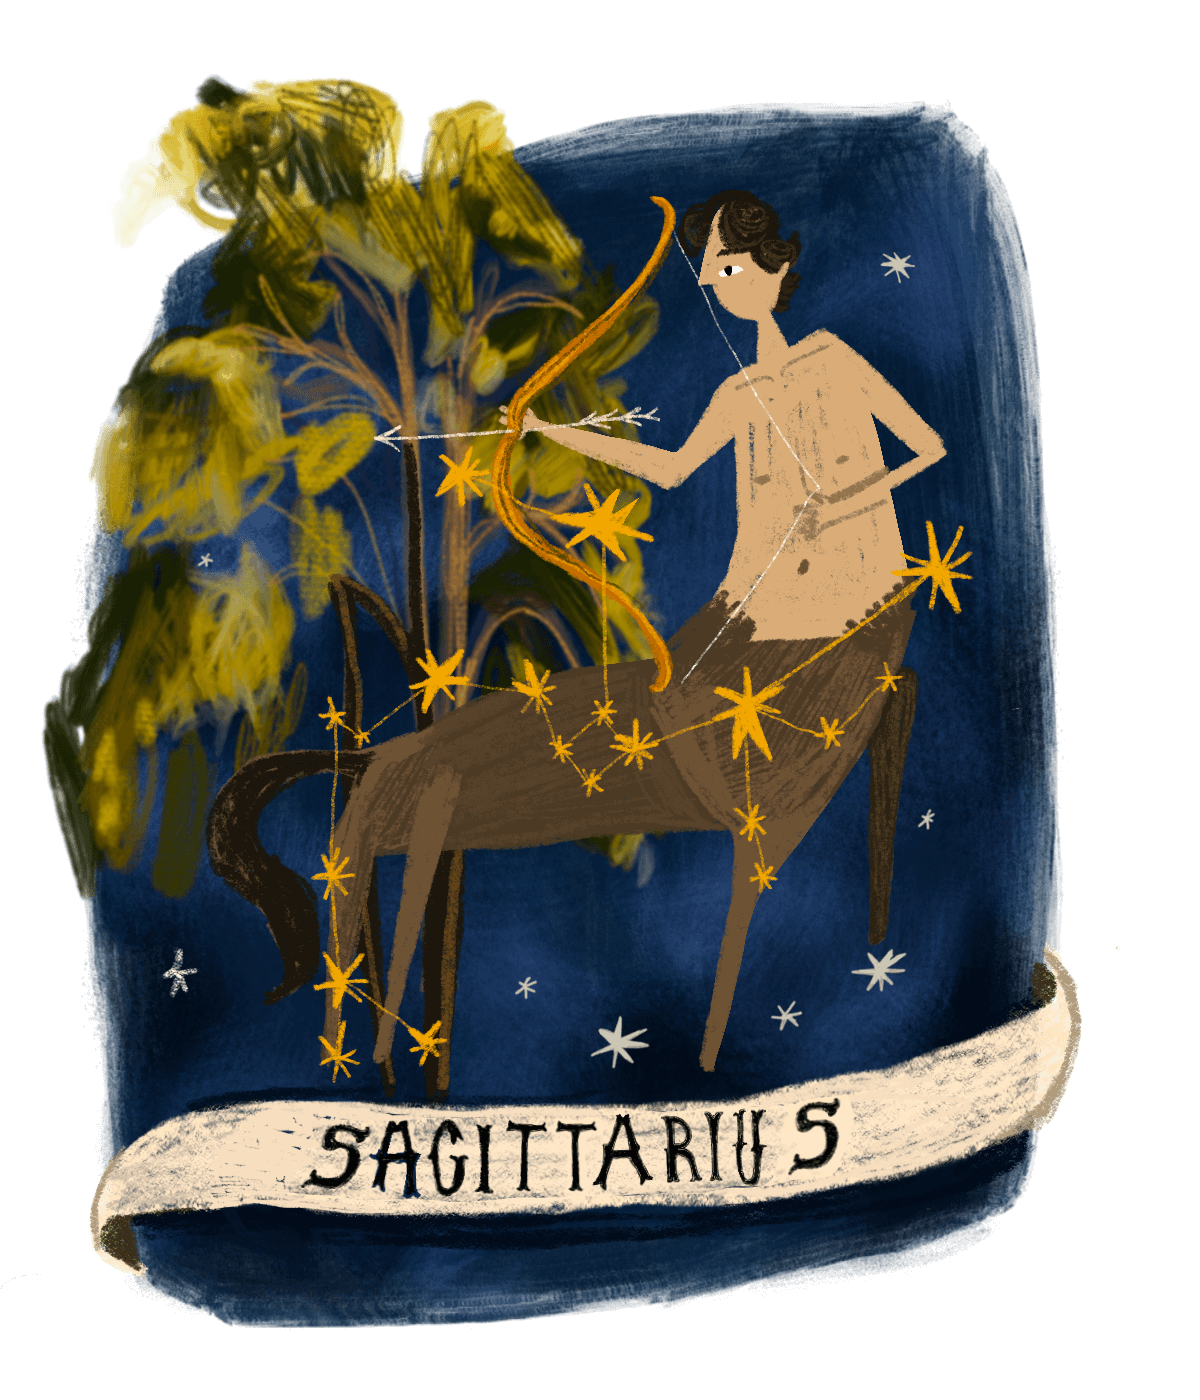 An illustration of the Sagitarius star sign.